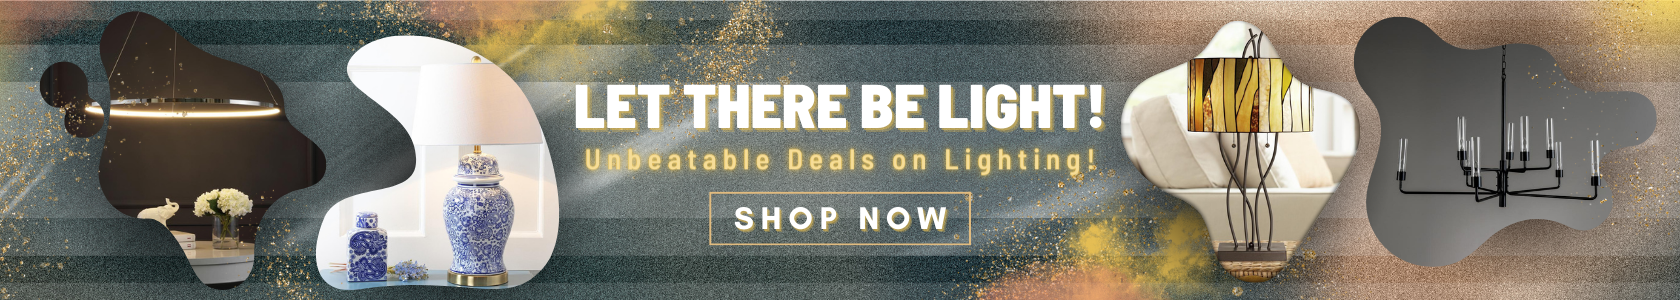 Lighting sale banner